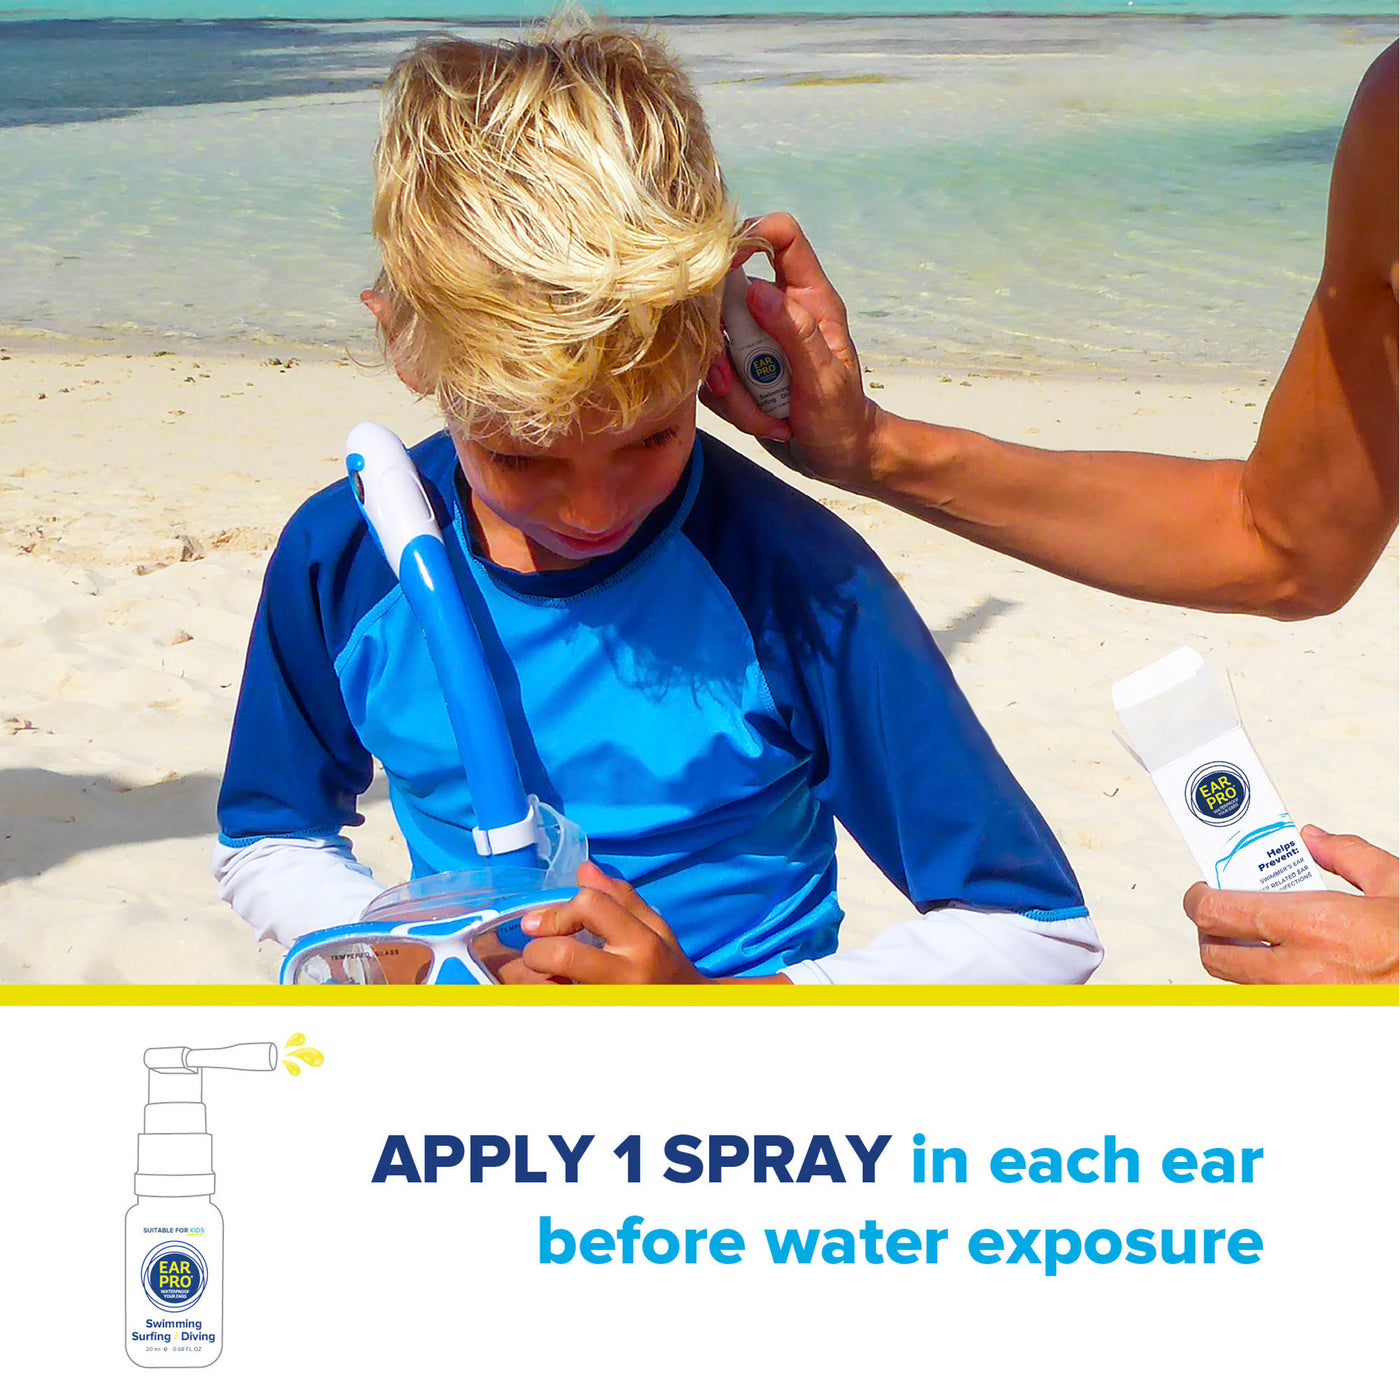 Ear Pro spray completamente natural